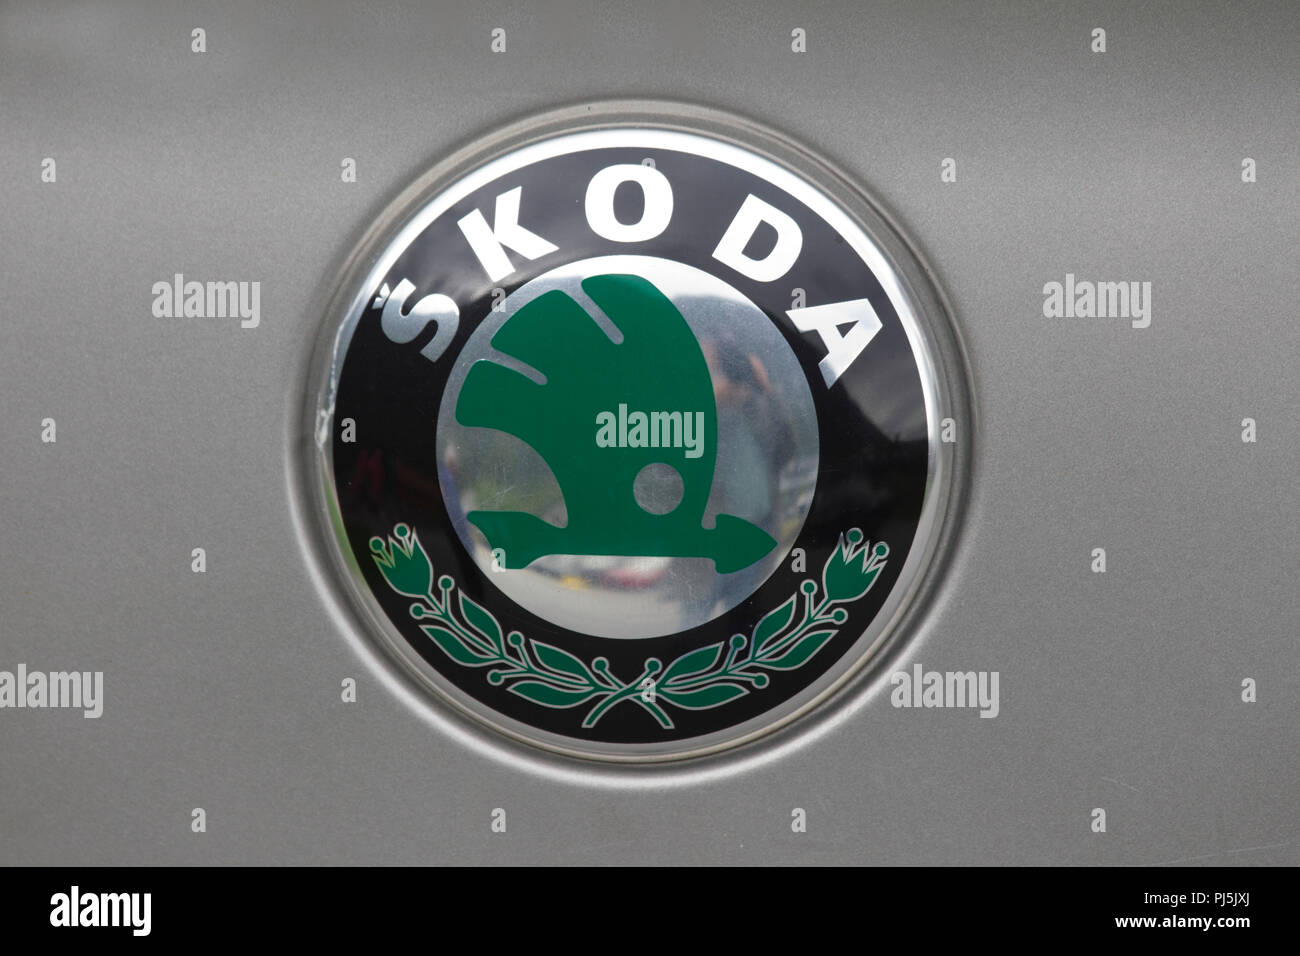 Skoda Car Badge closeup Stock Photo